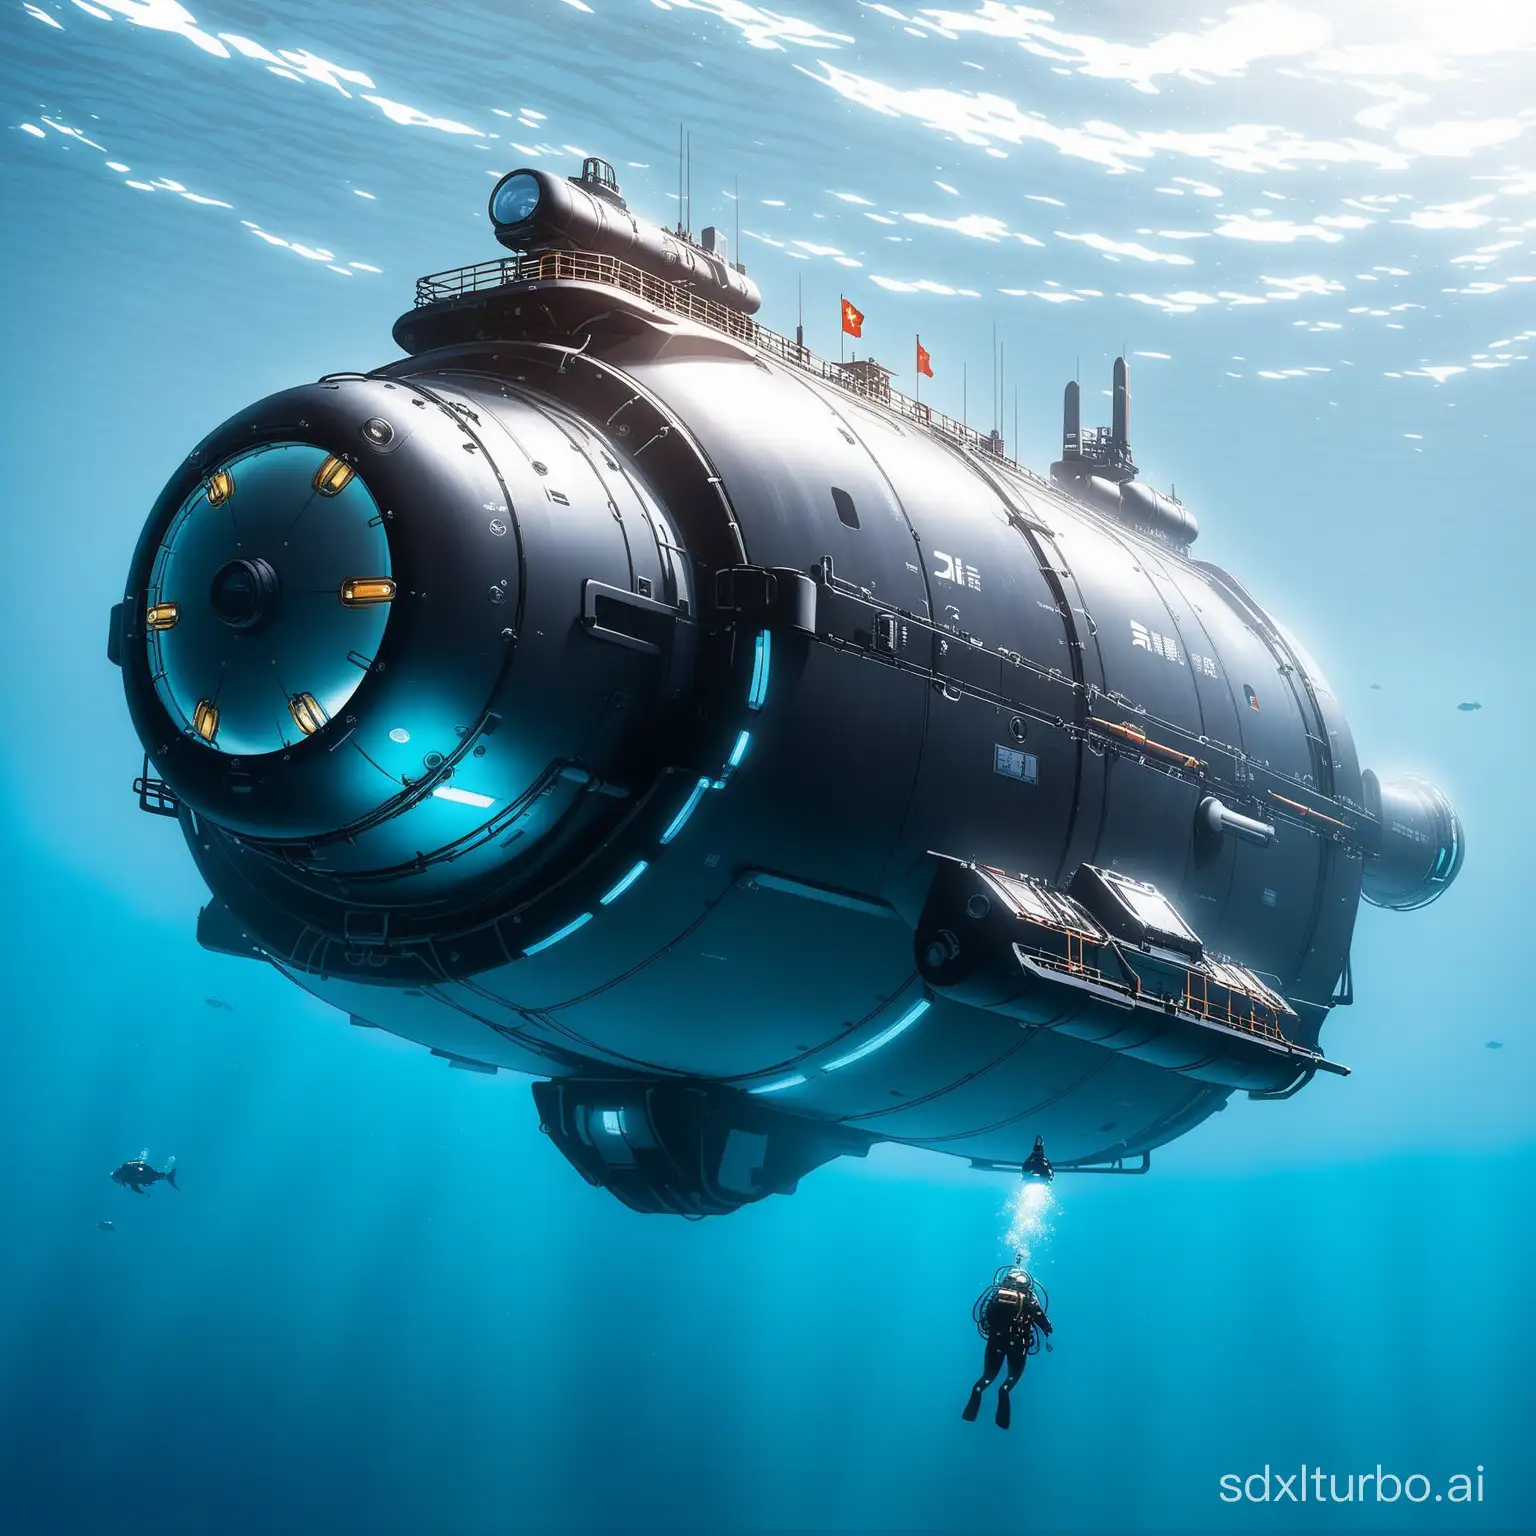  China's Jiaolong Submersible科幻